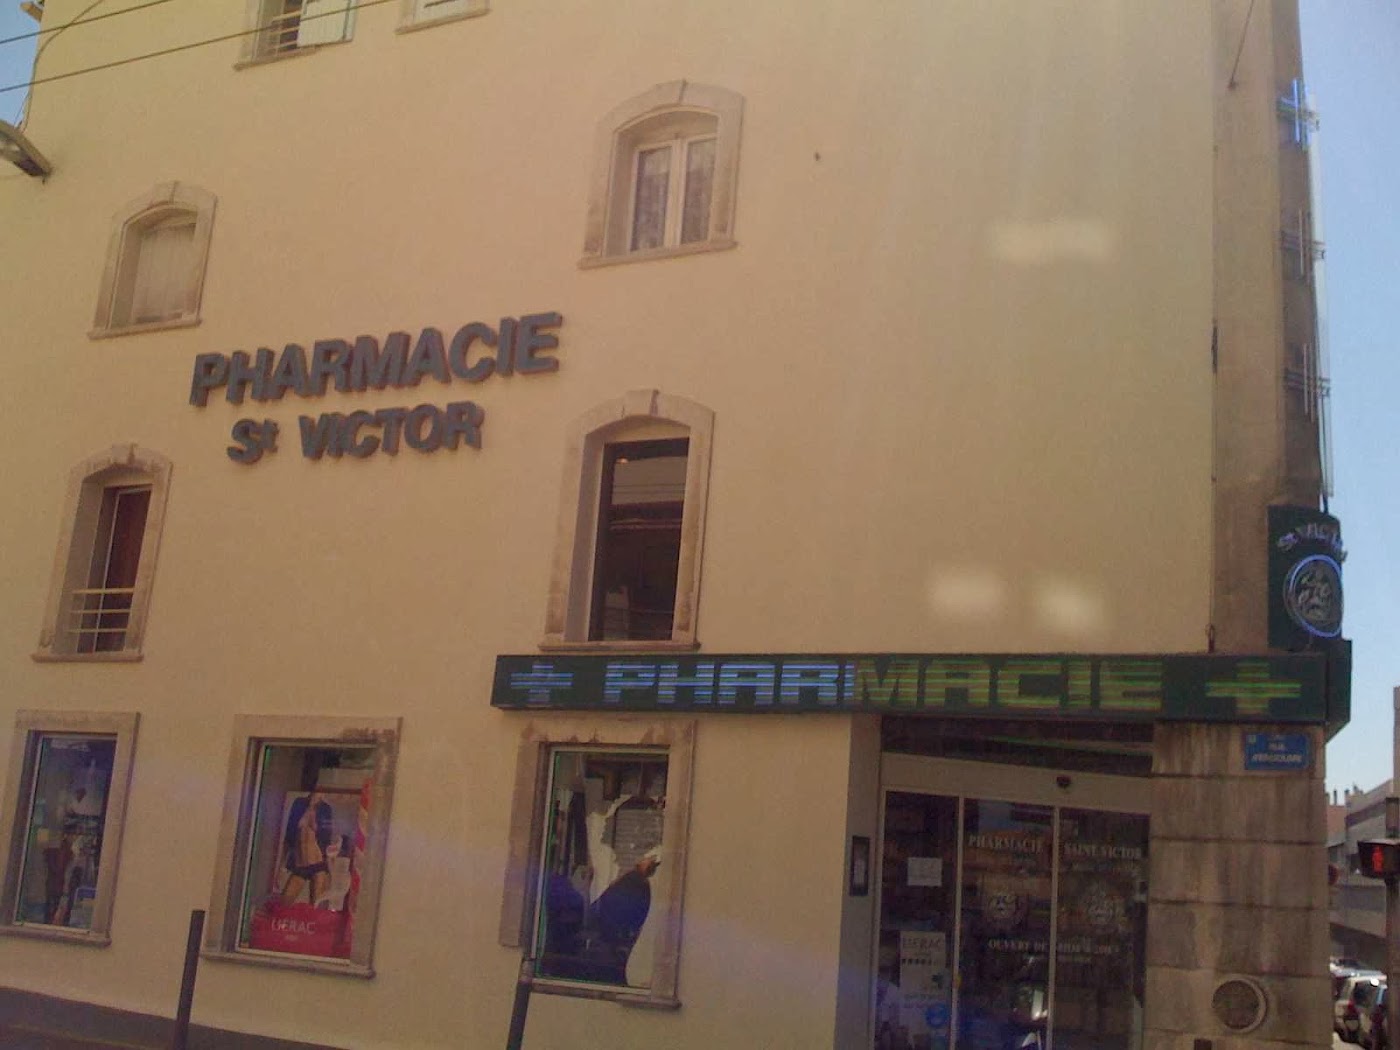 Pharmacie Saint Victor well&well